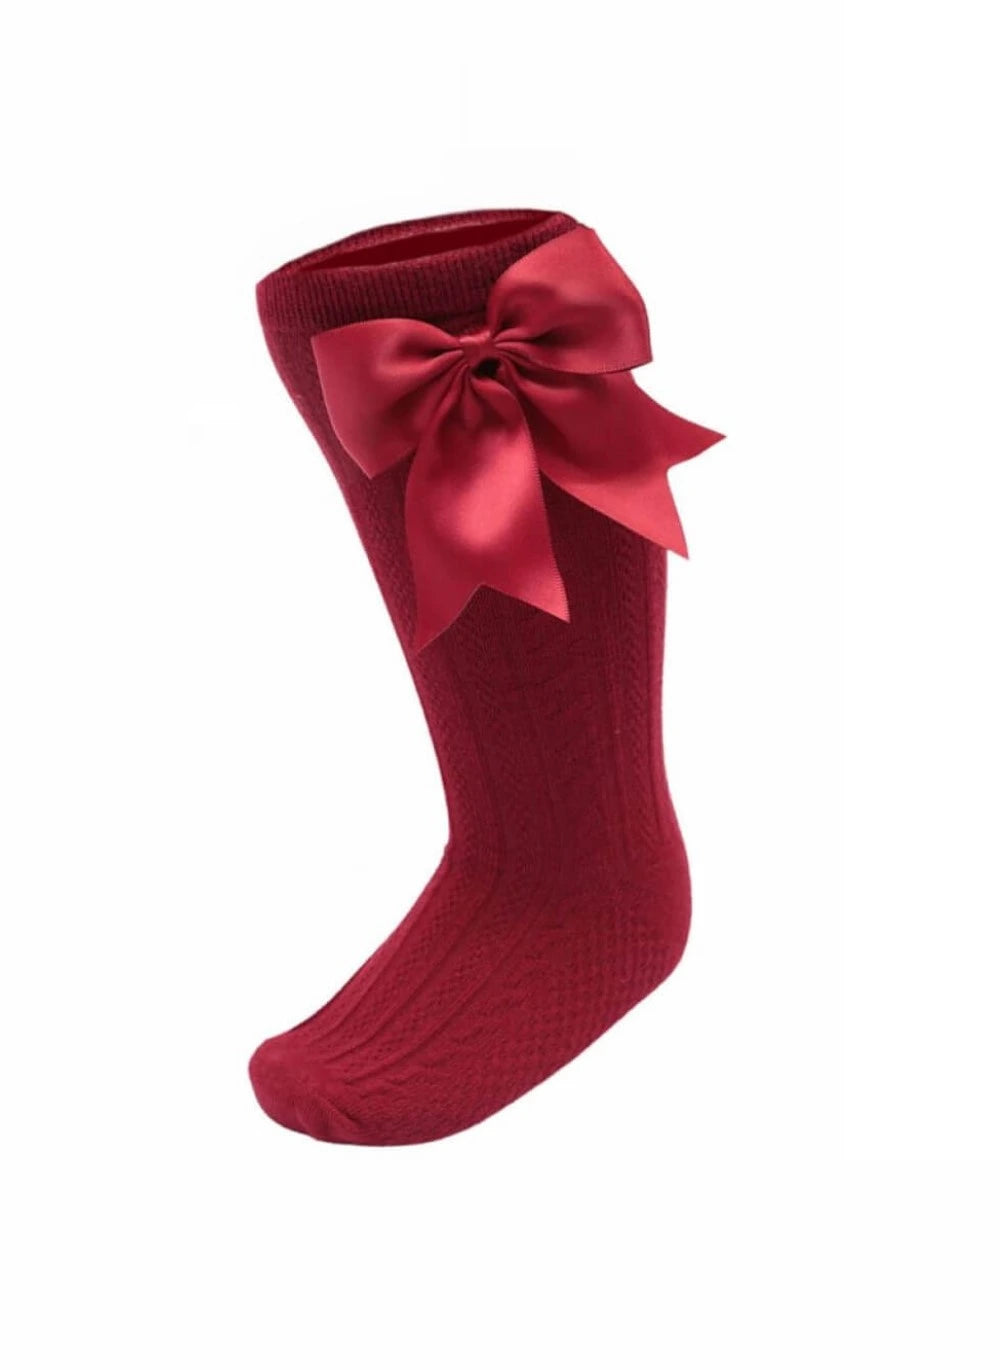 burgundy bow socks from tors childrens wear